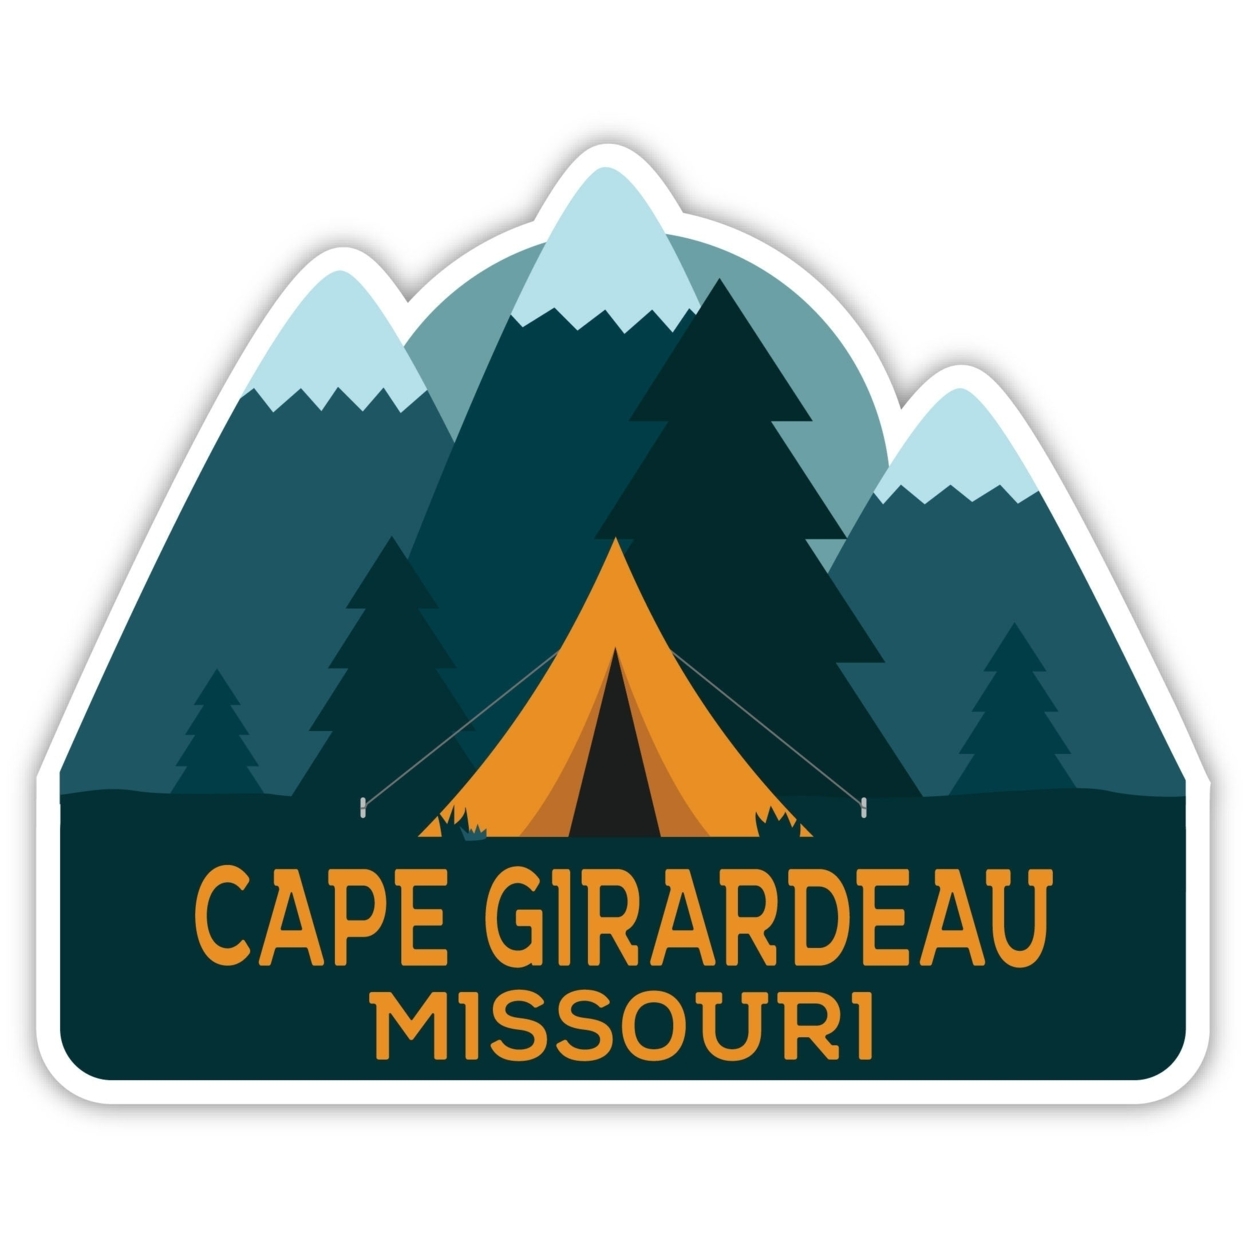 Cape Girardeau Missouri Souvenir Decorative Stickers (Choose Theme And Size) - 4-Pack, 6-Inch, Tent